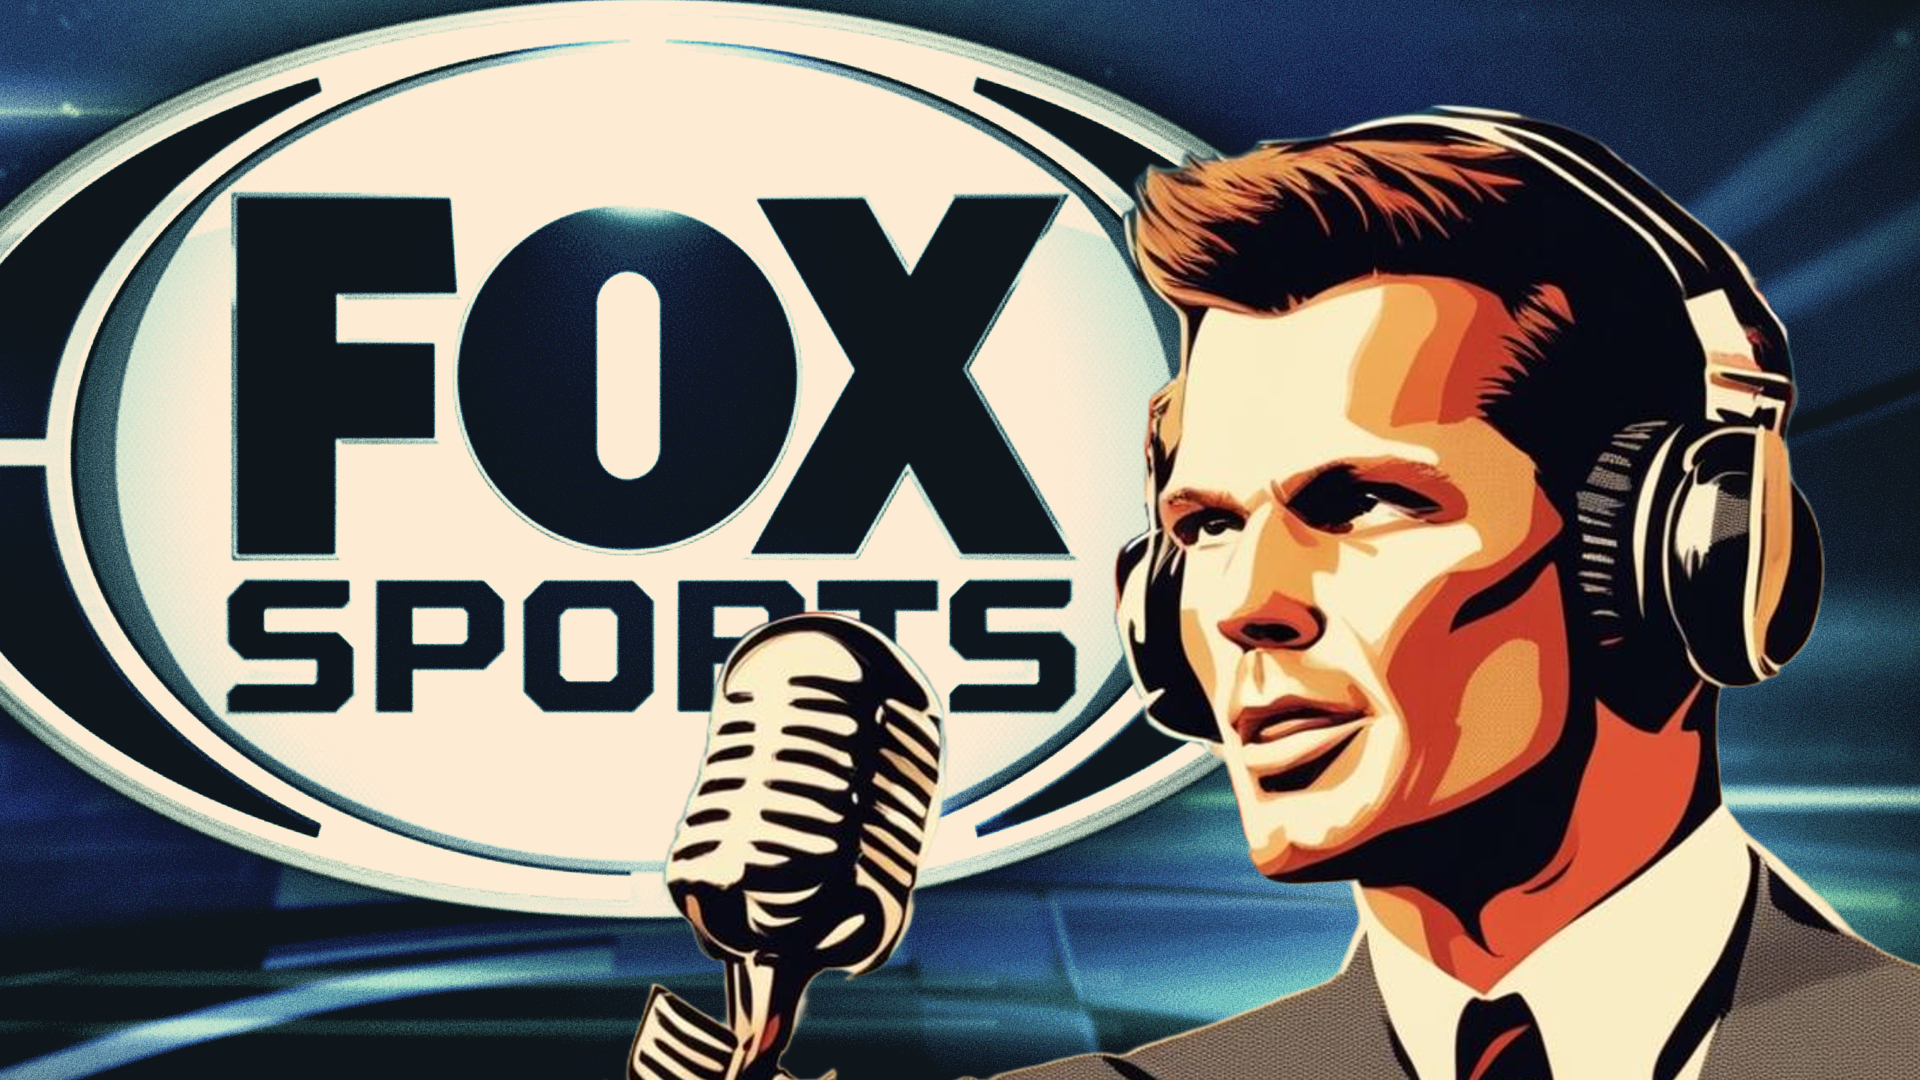 Specialty image of Tom Brady and the FOX Sports logo